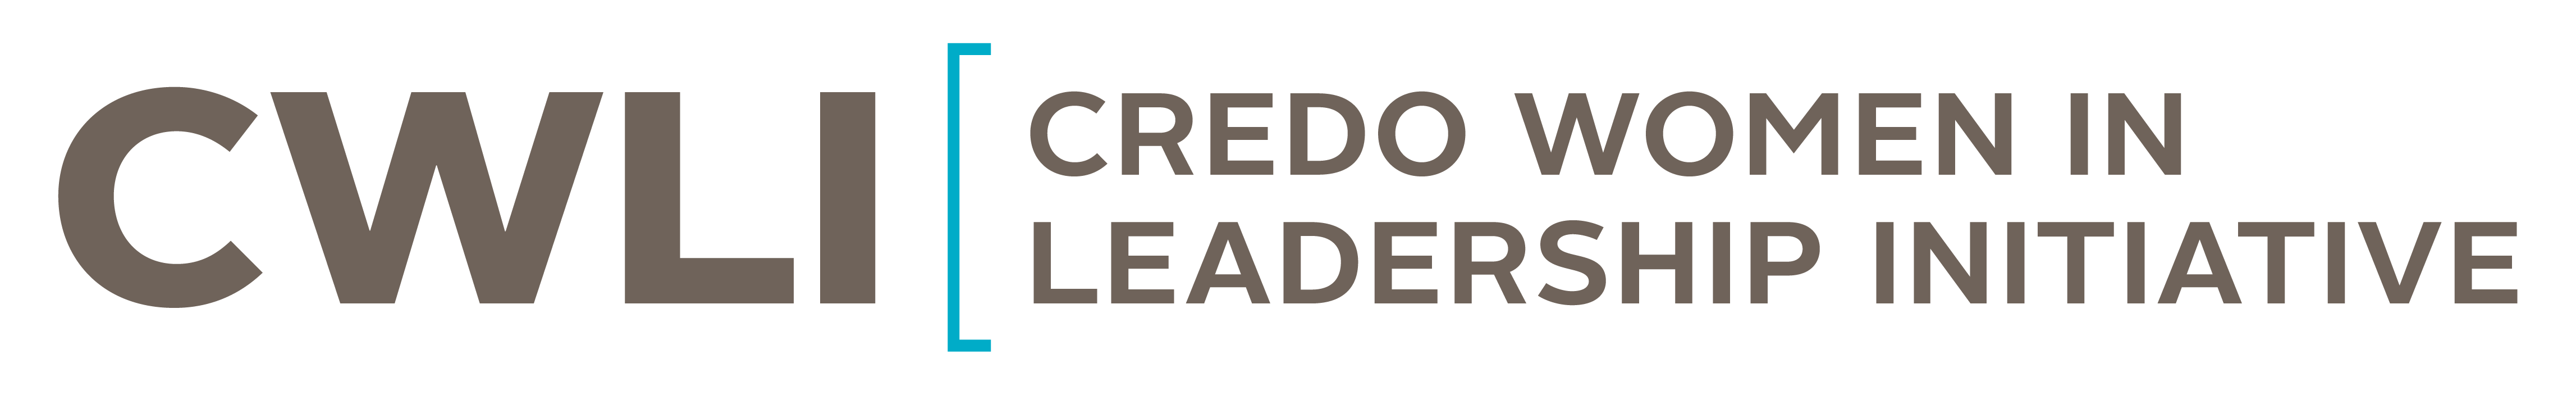 CWLI Credo Women in Leadership Initiative